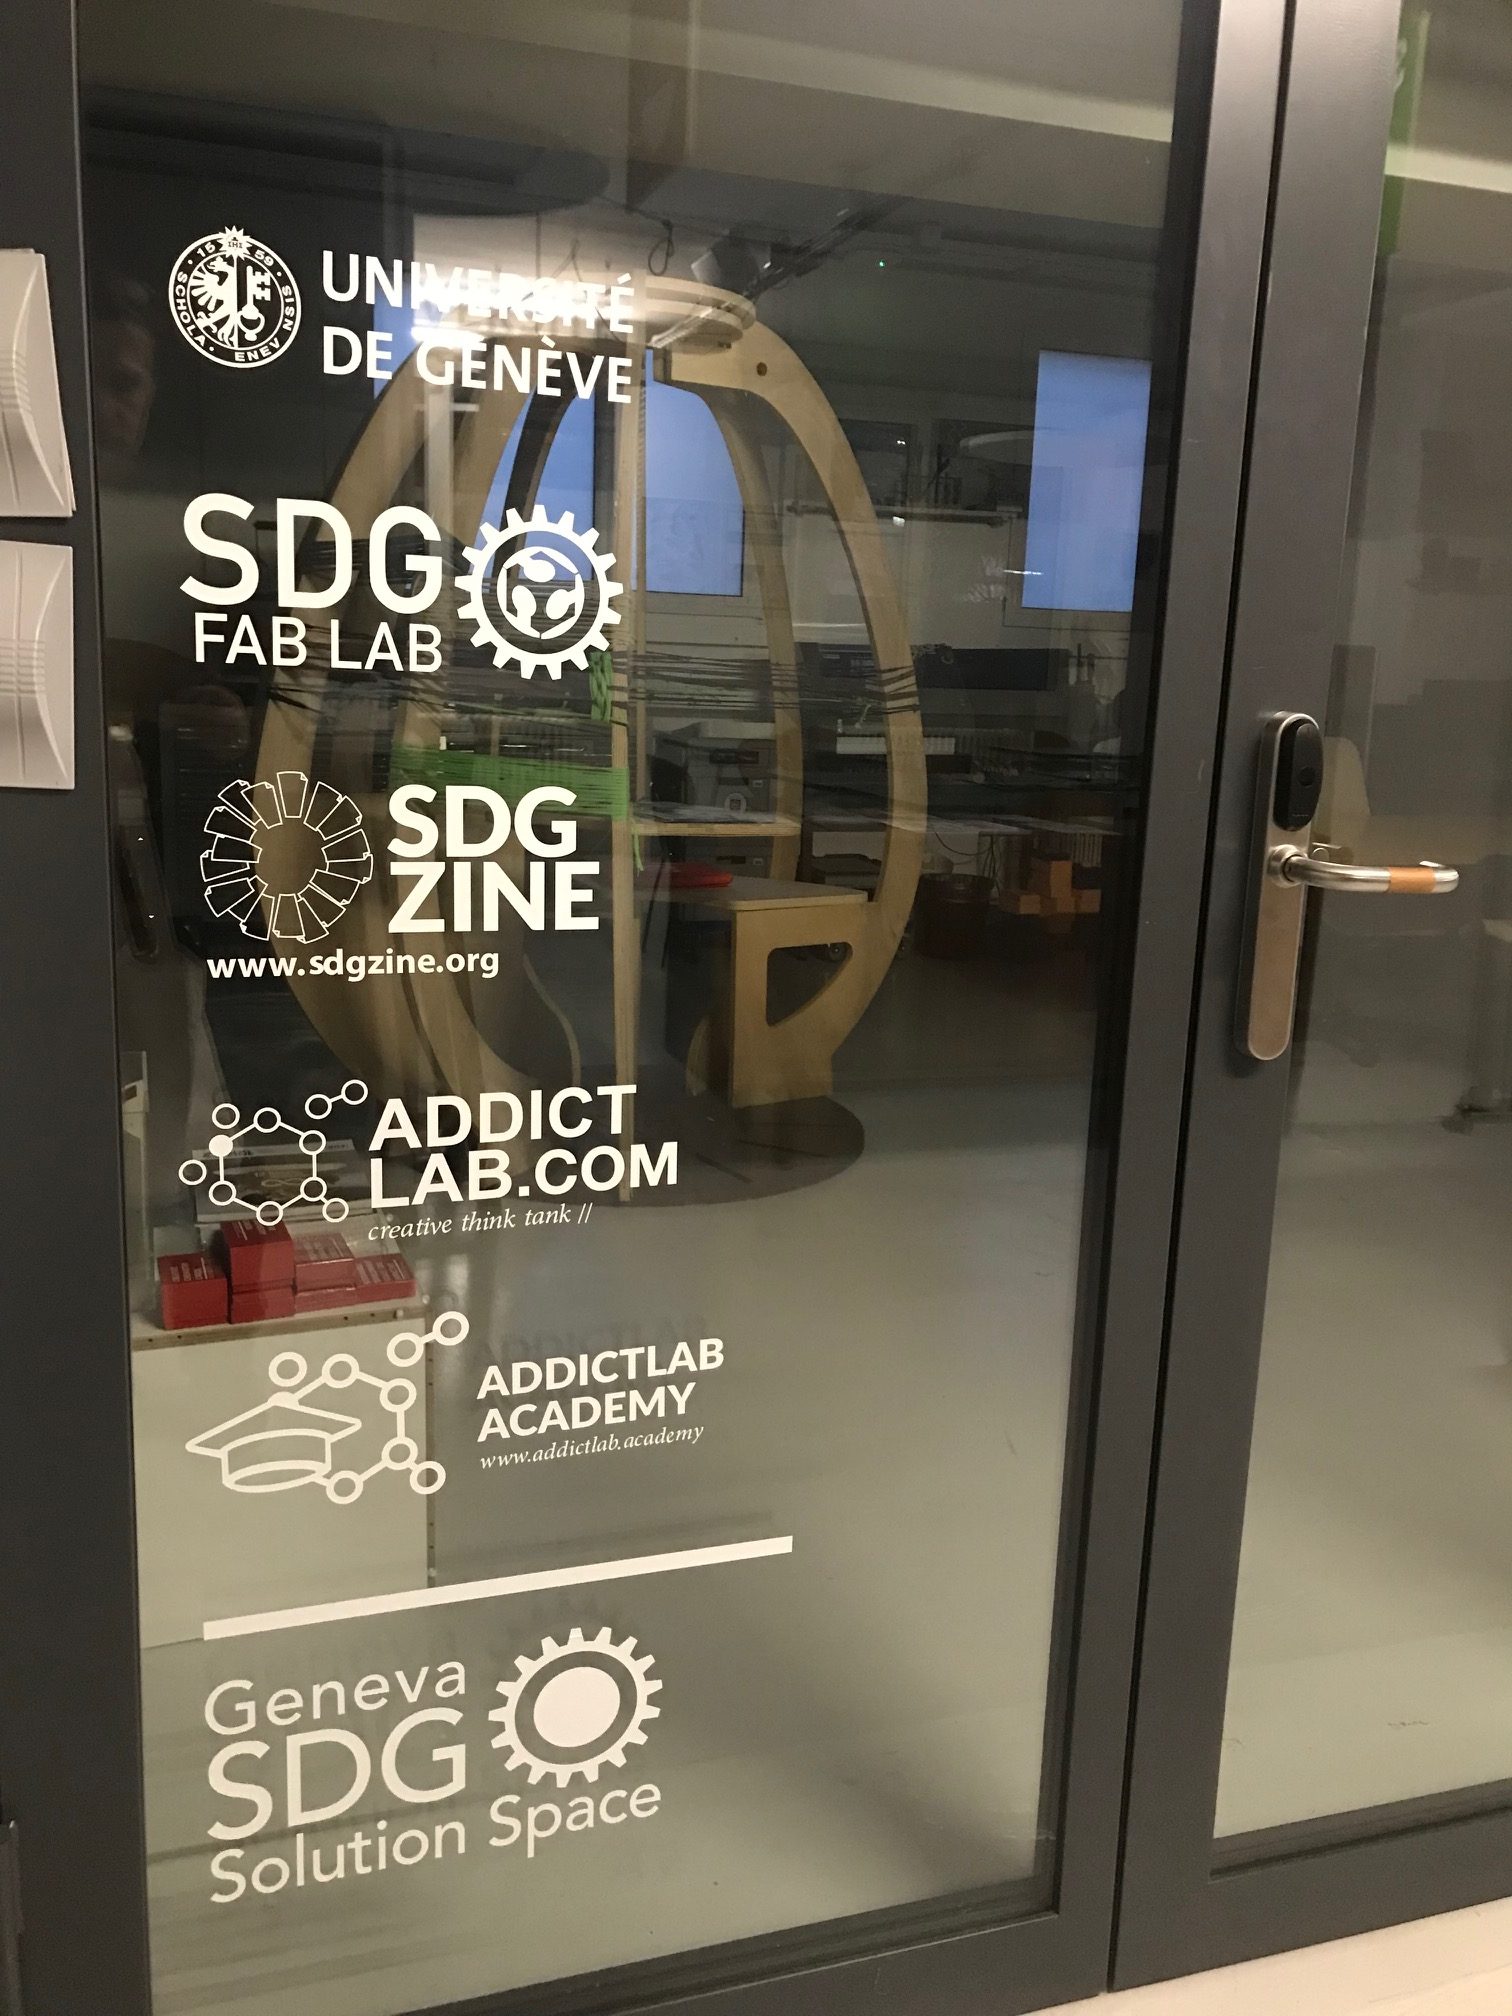 Addictlab manages the SDG Fab Lab at University of Geneva